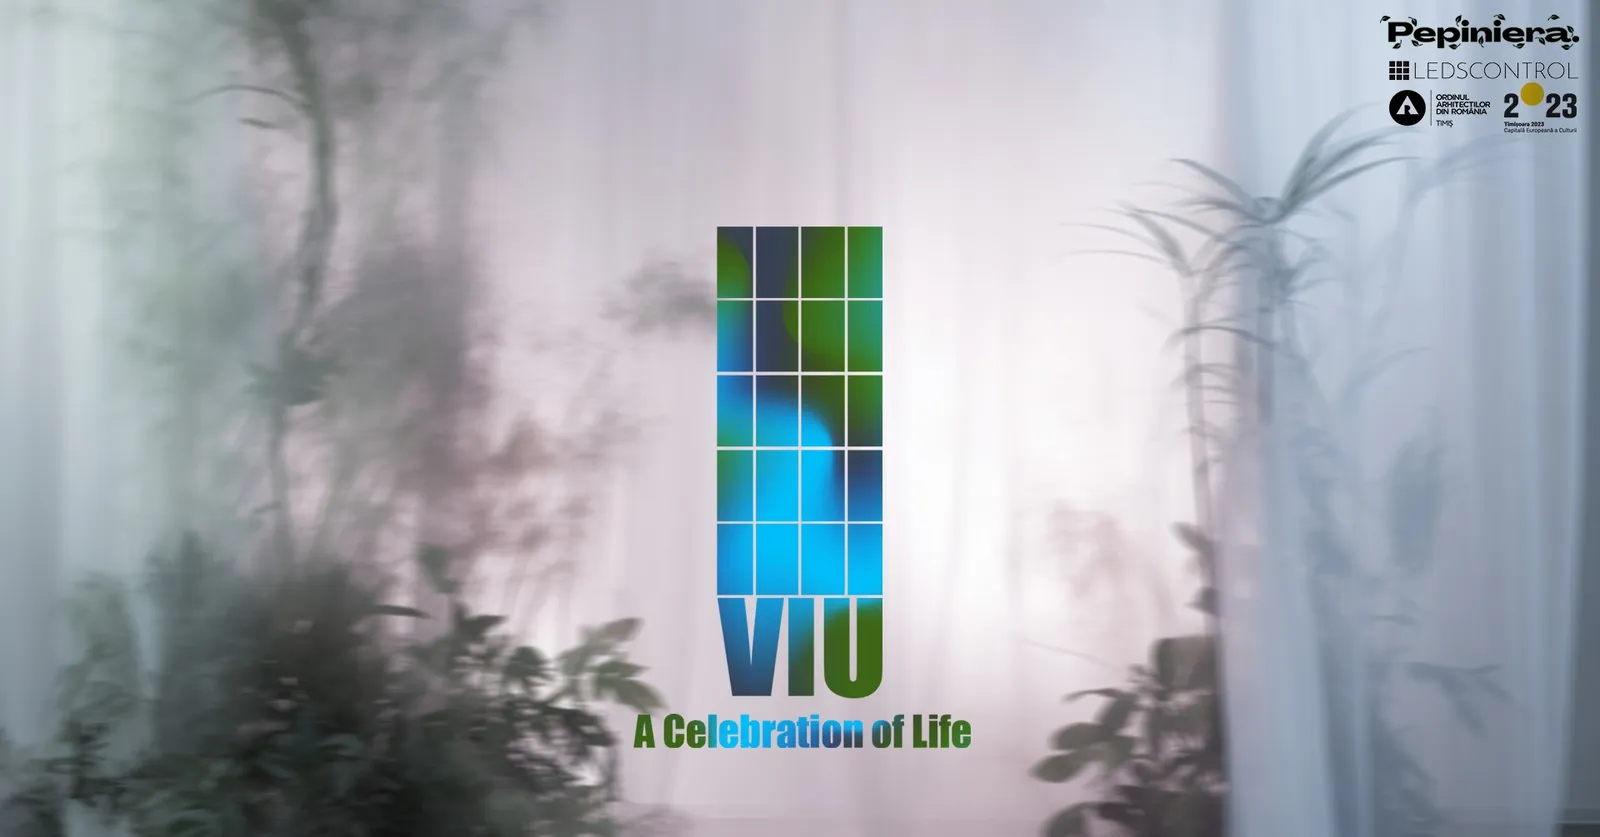 VIU: A Celebration of Life